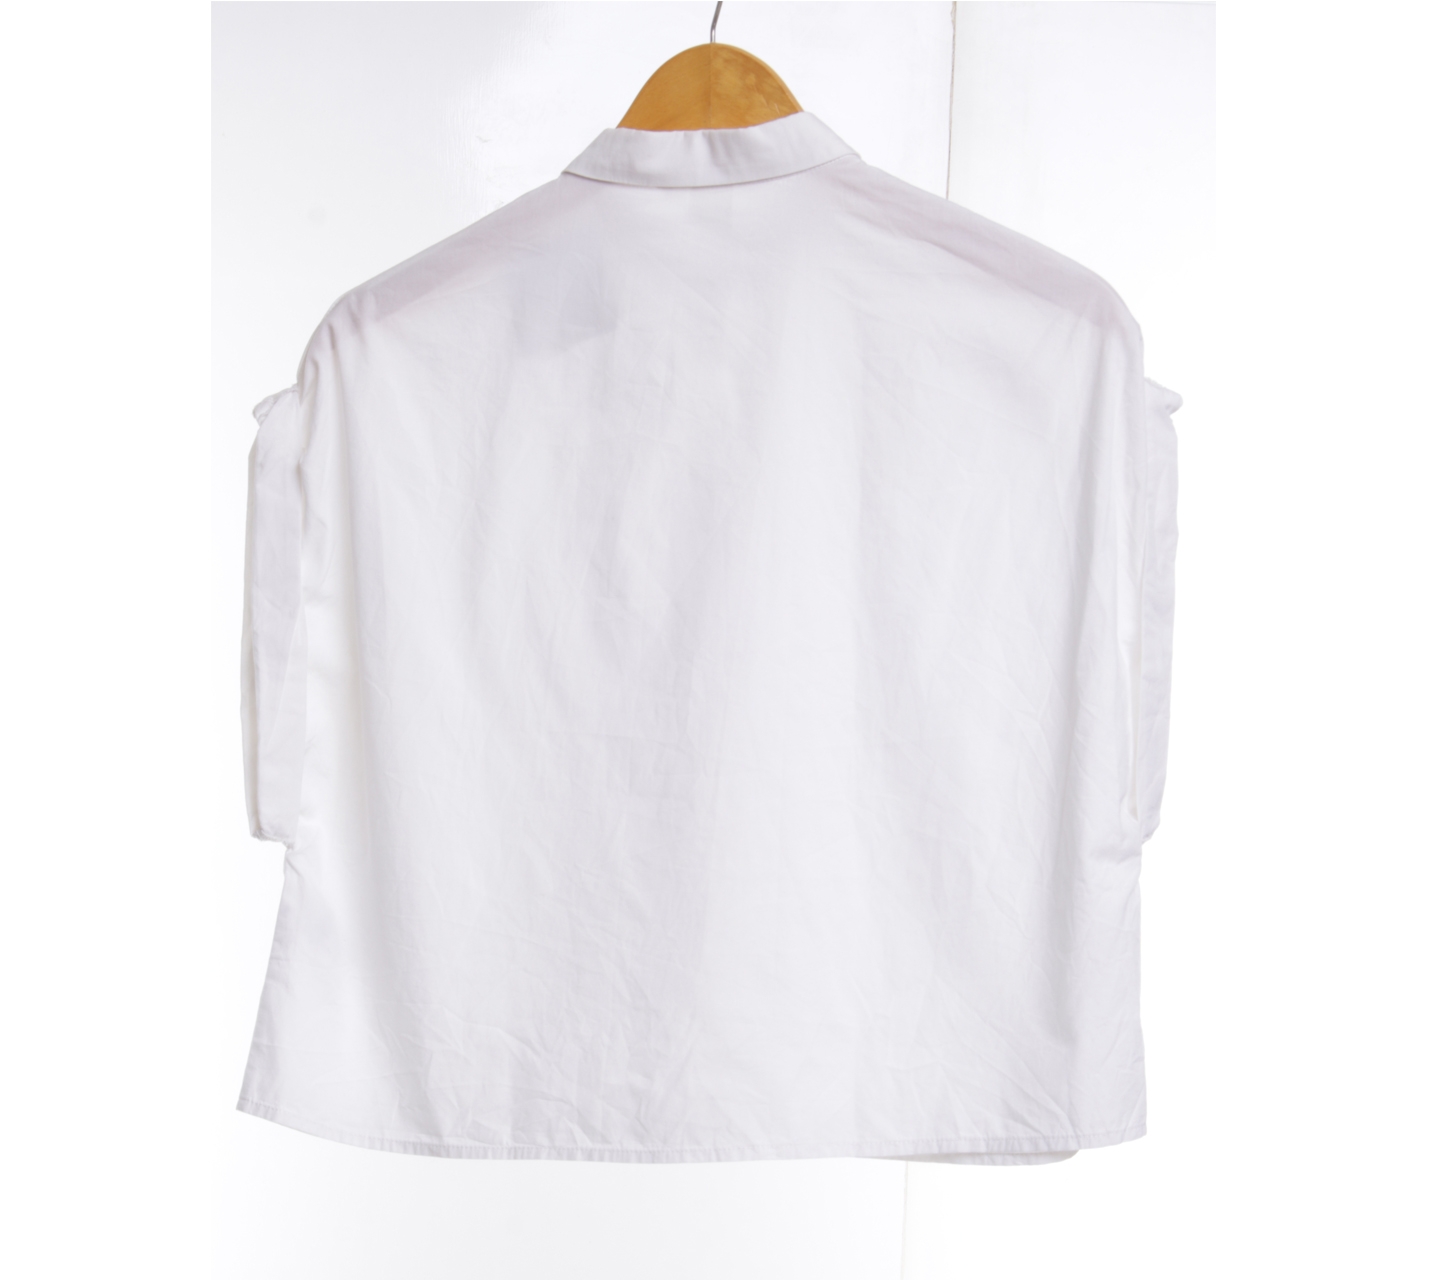 H&M Off White Short Sleeve Shirt